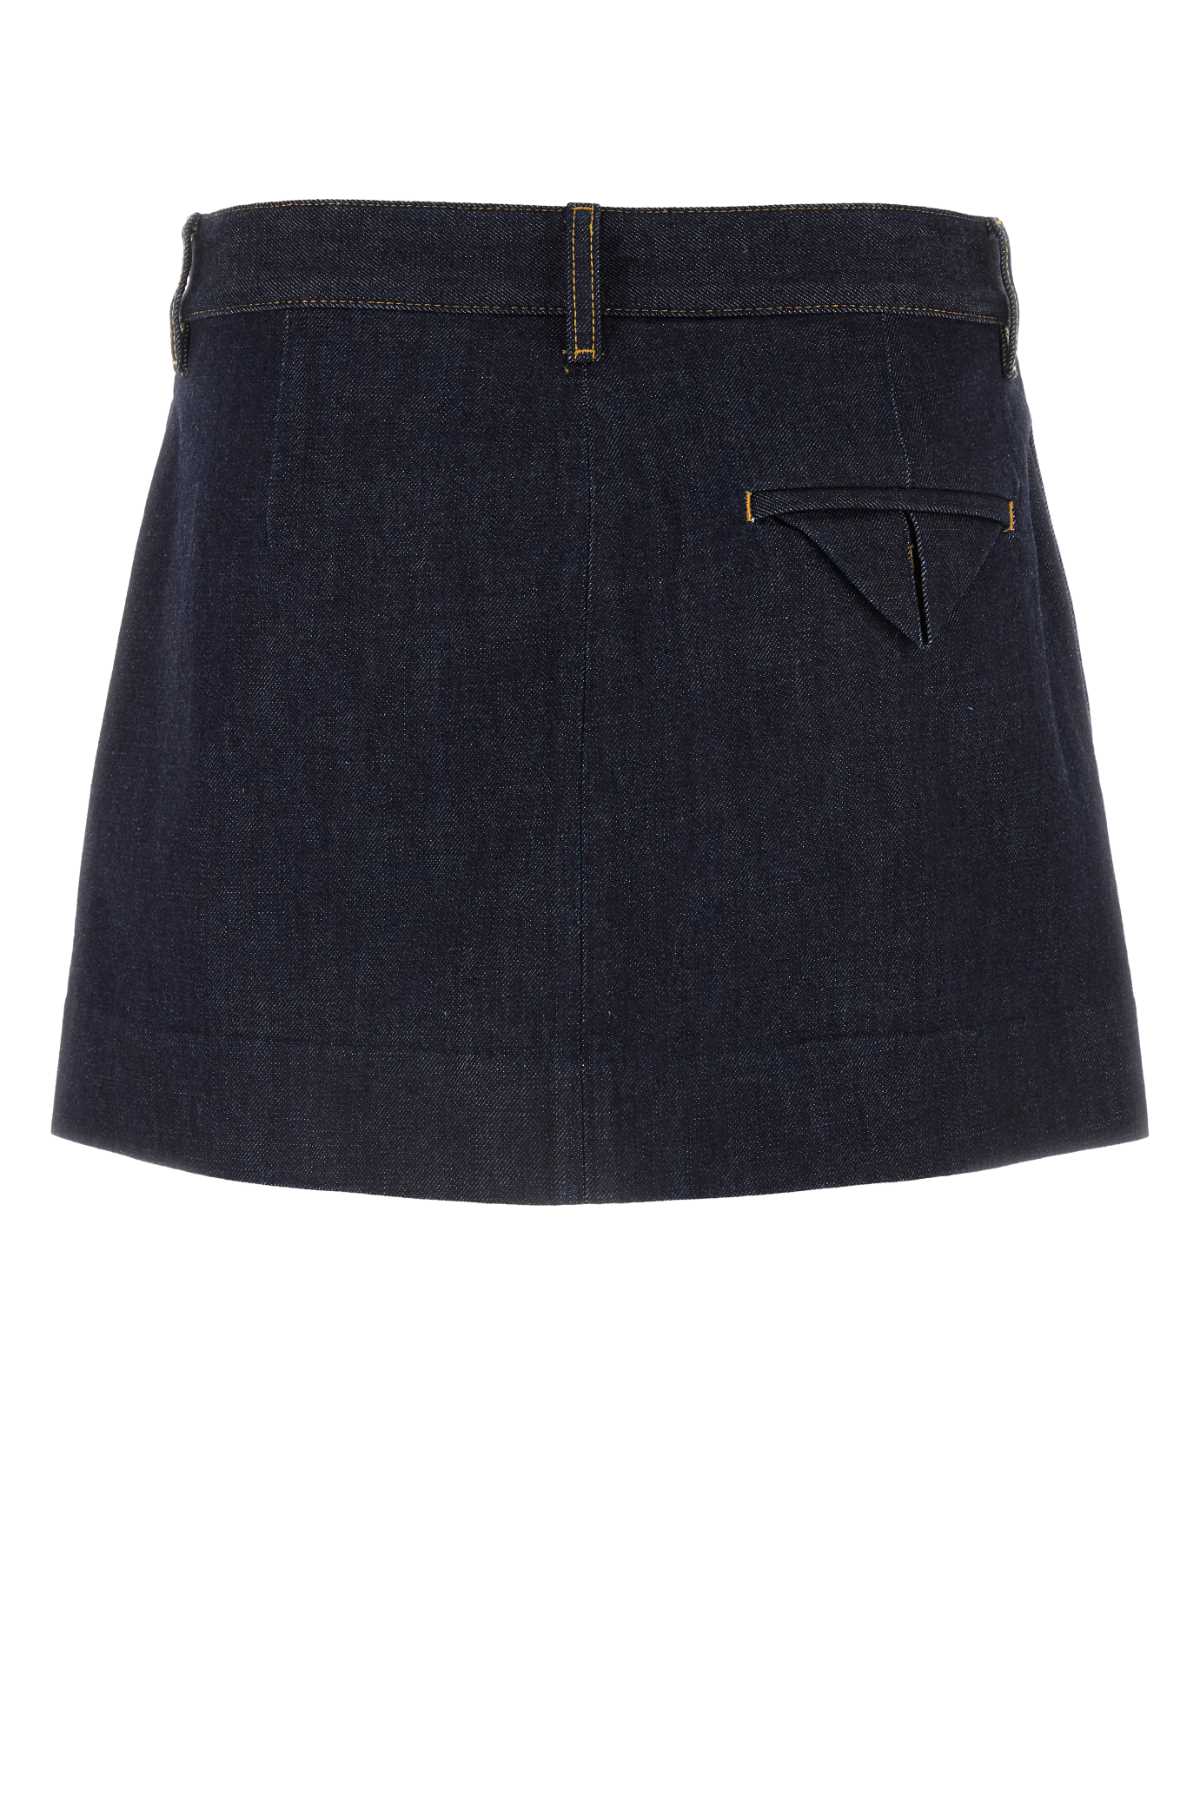 Bottega Veneta Dark Blue Denim Mini Skirt